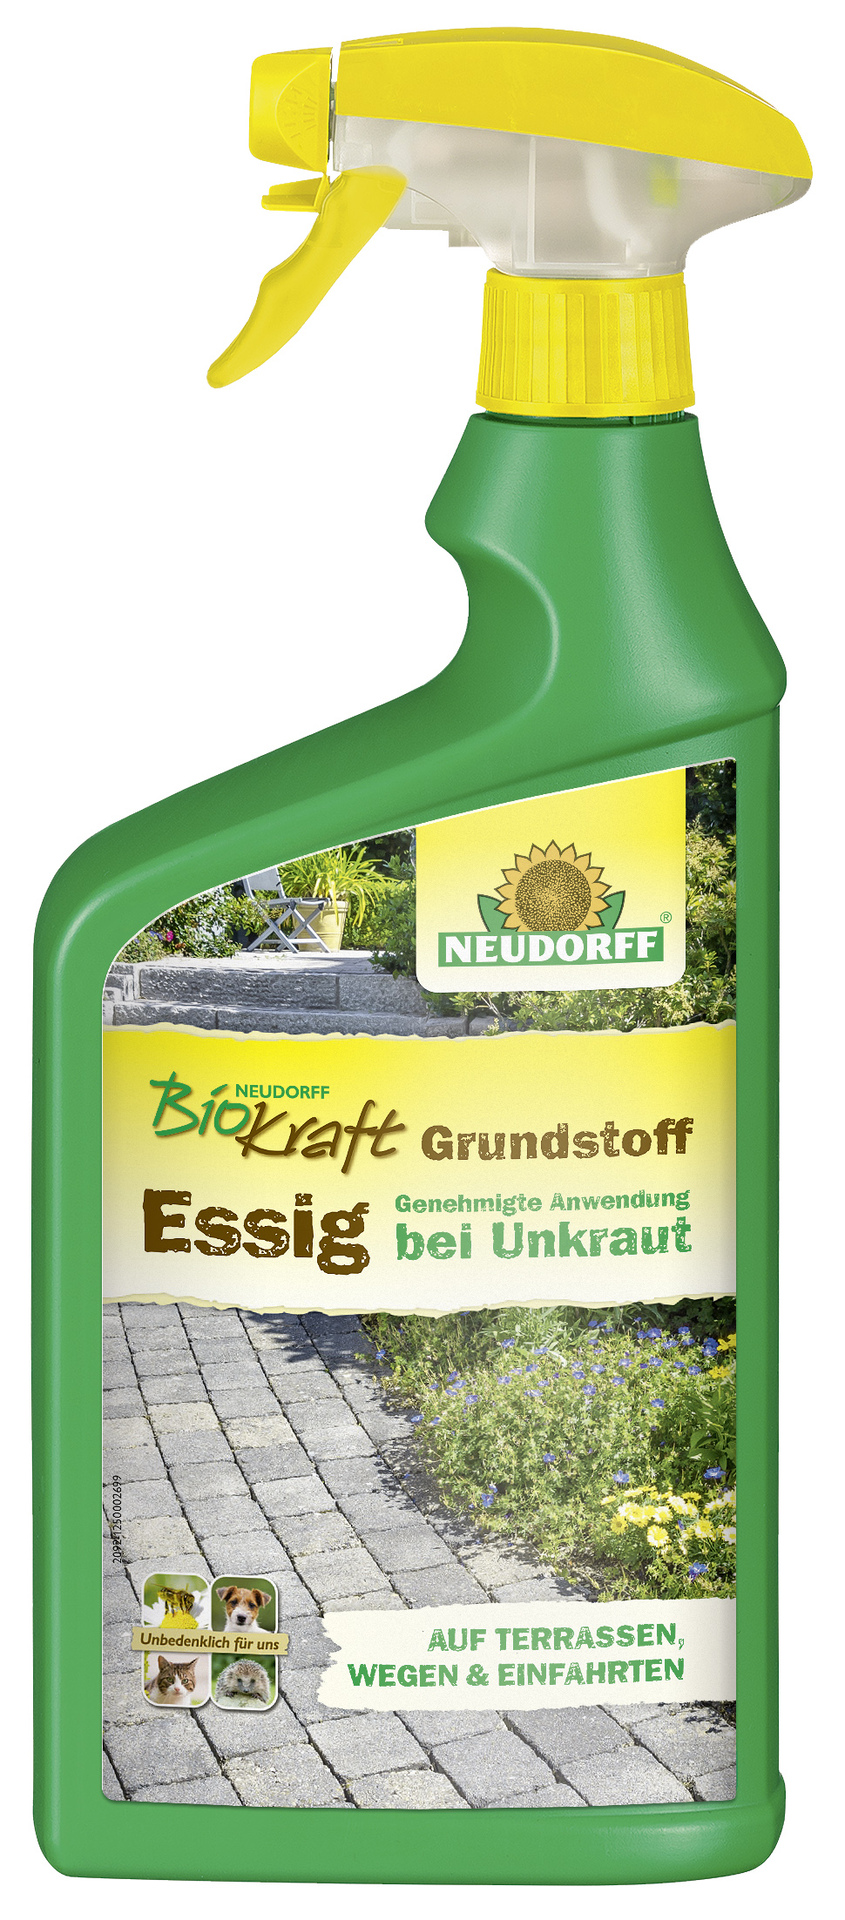 W. Neudorff GmbH KG BioKraft Grundstoff Essig